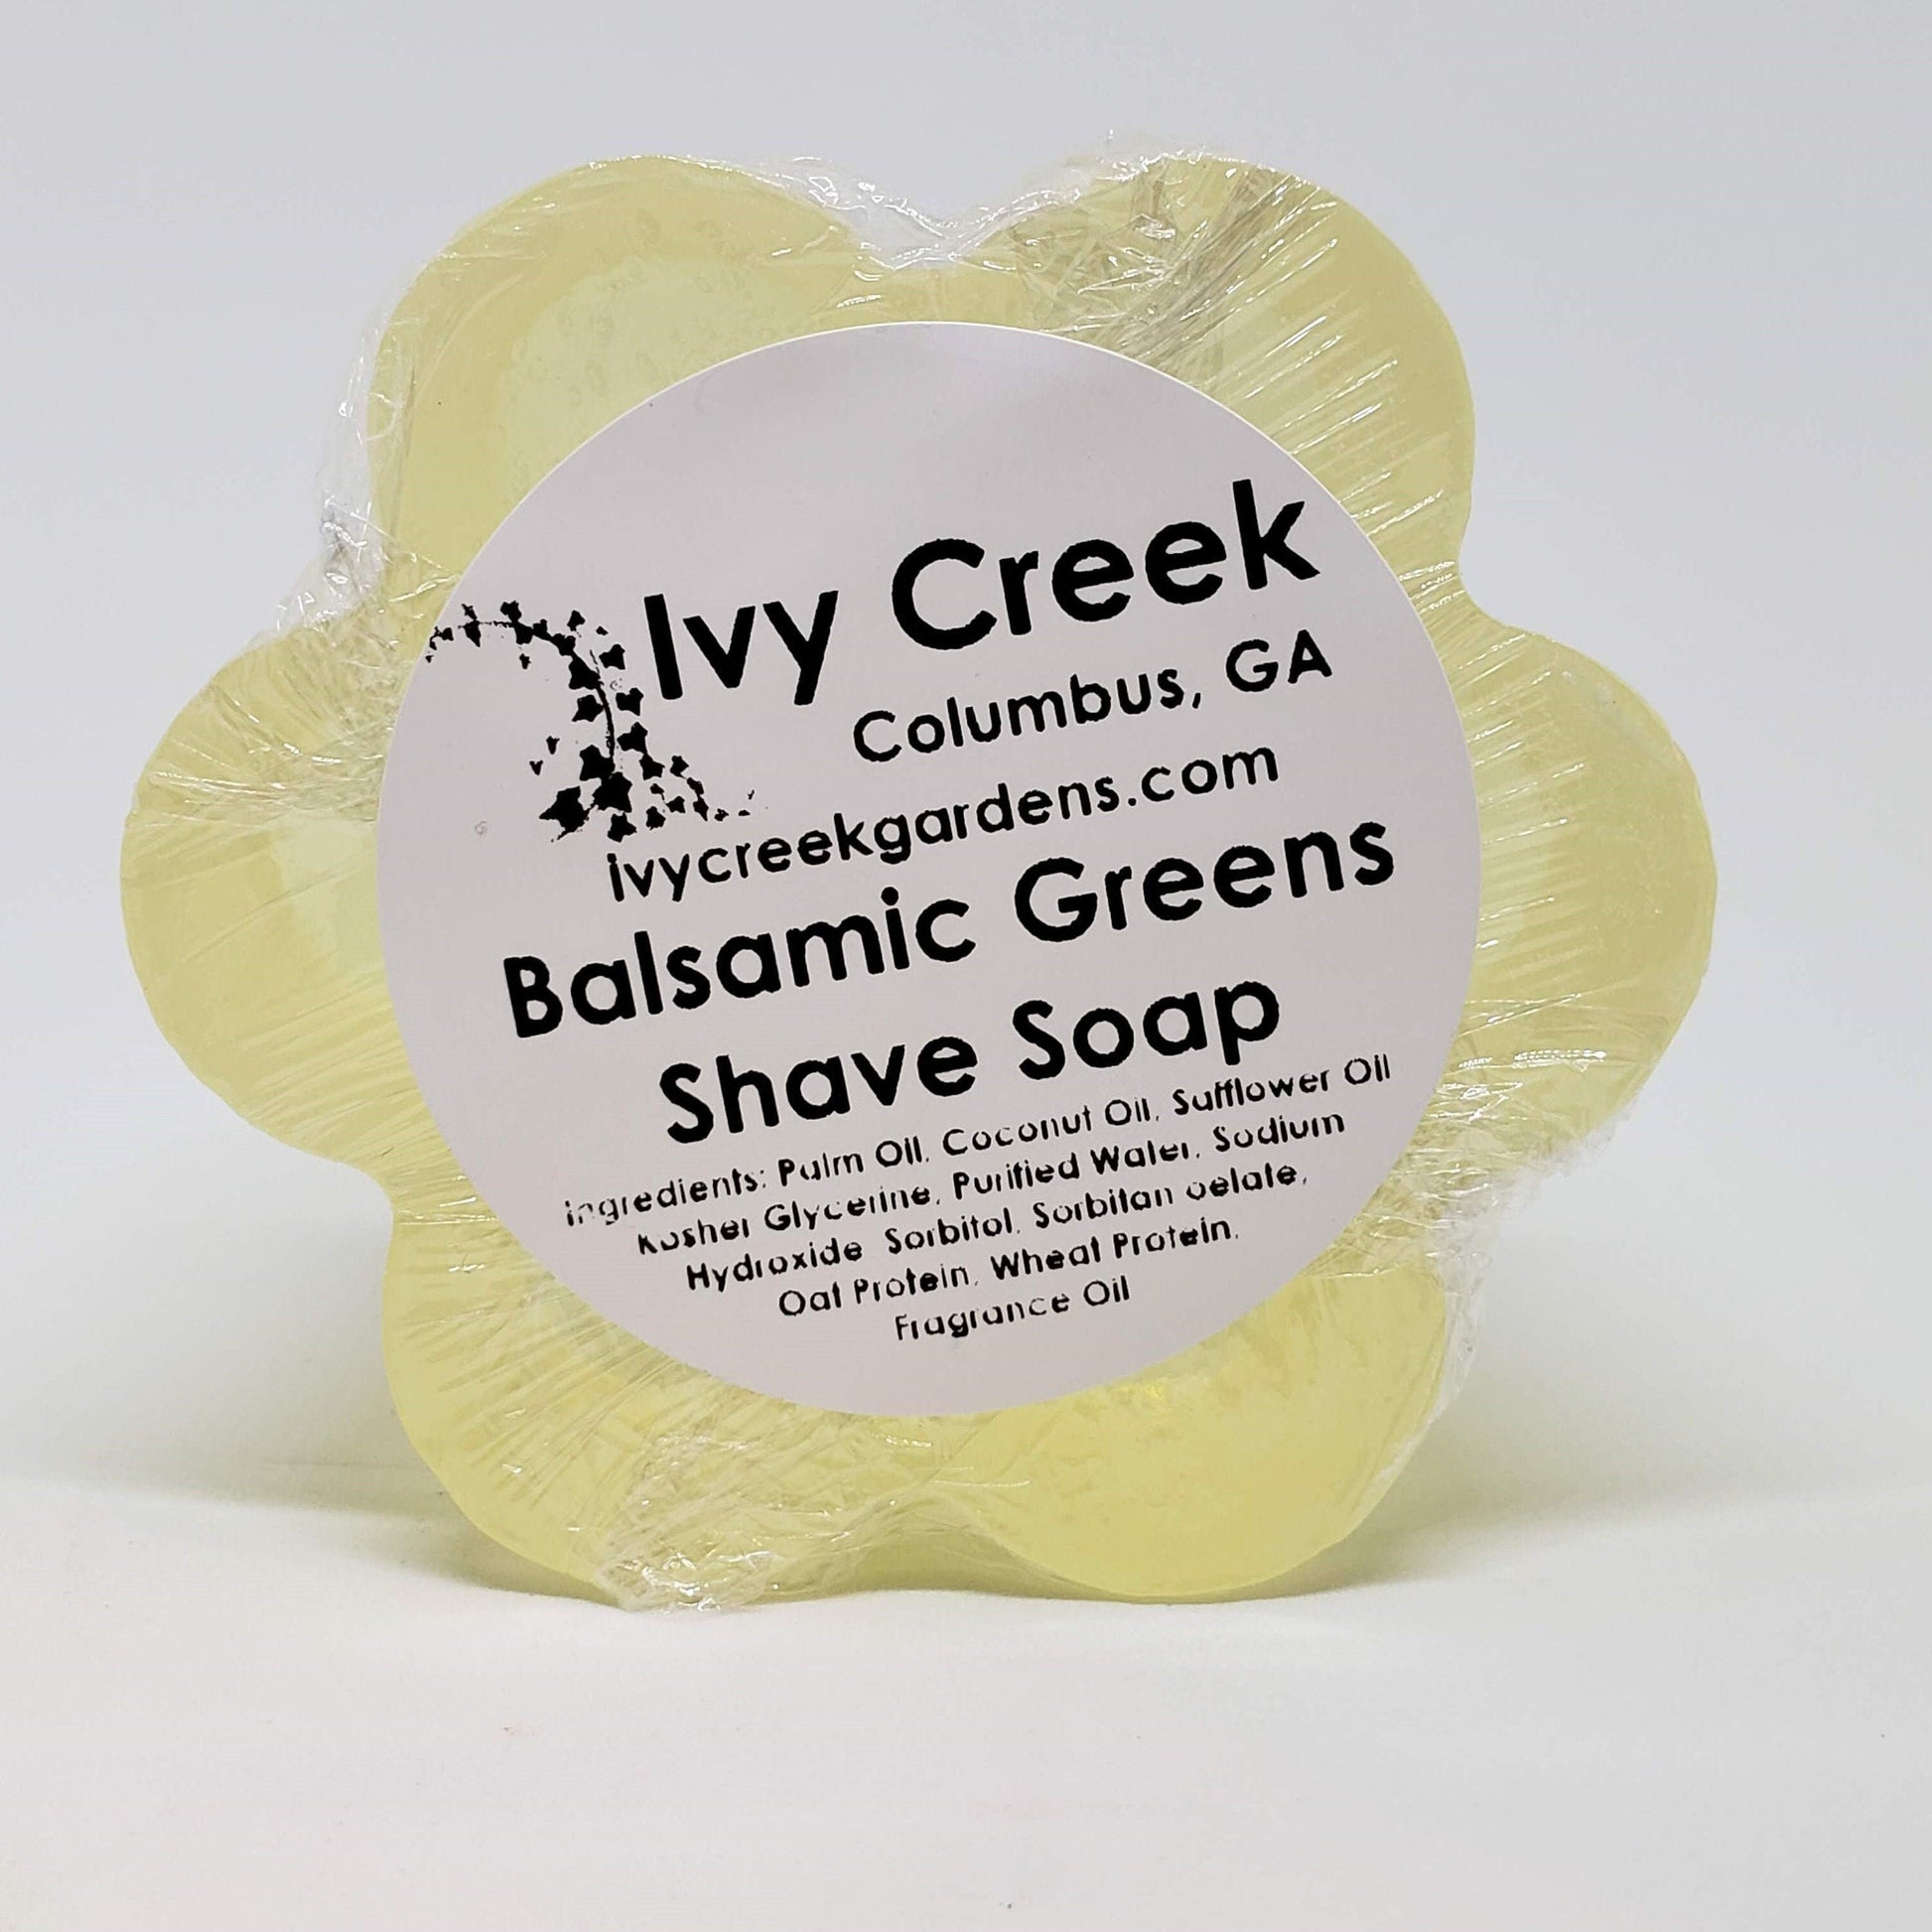 Ivy Creek Balsamic Greens Shave Soap - Glycerin-based, Fresh Scent, Prevents Razor Burn, 3.5 oz